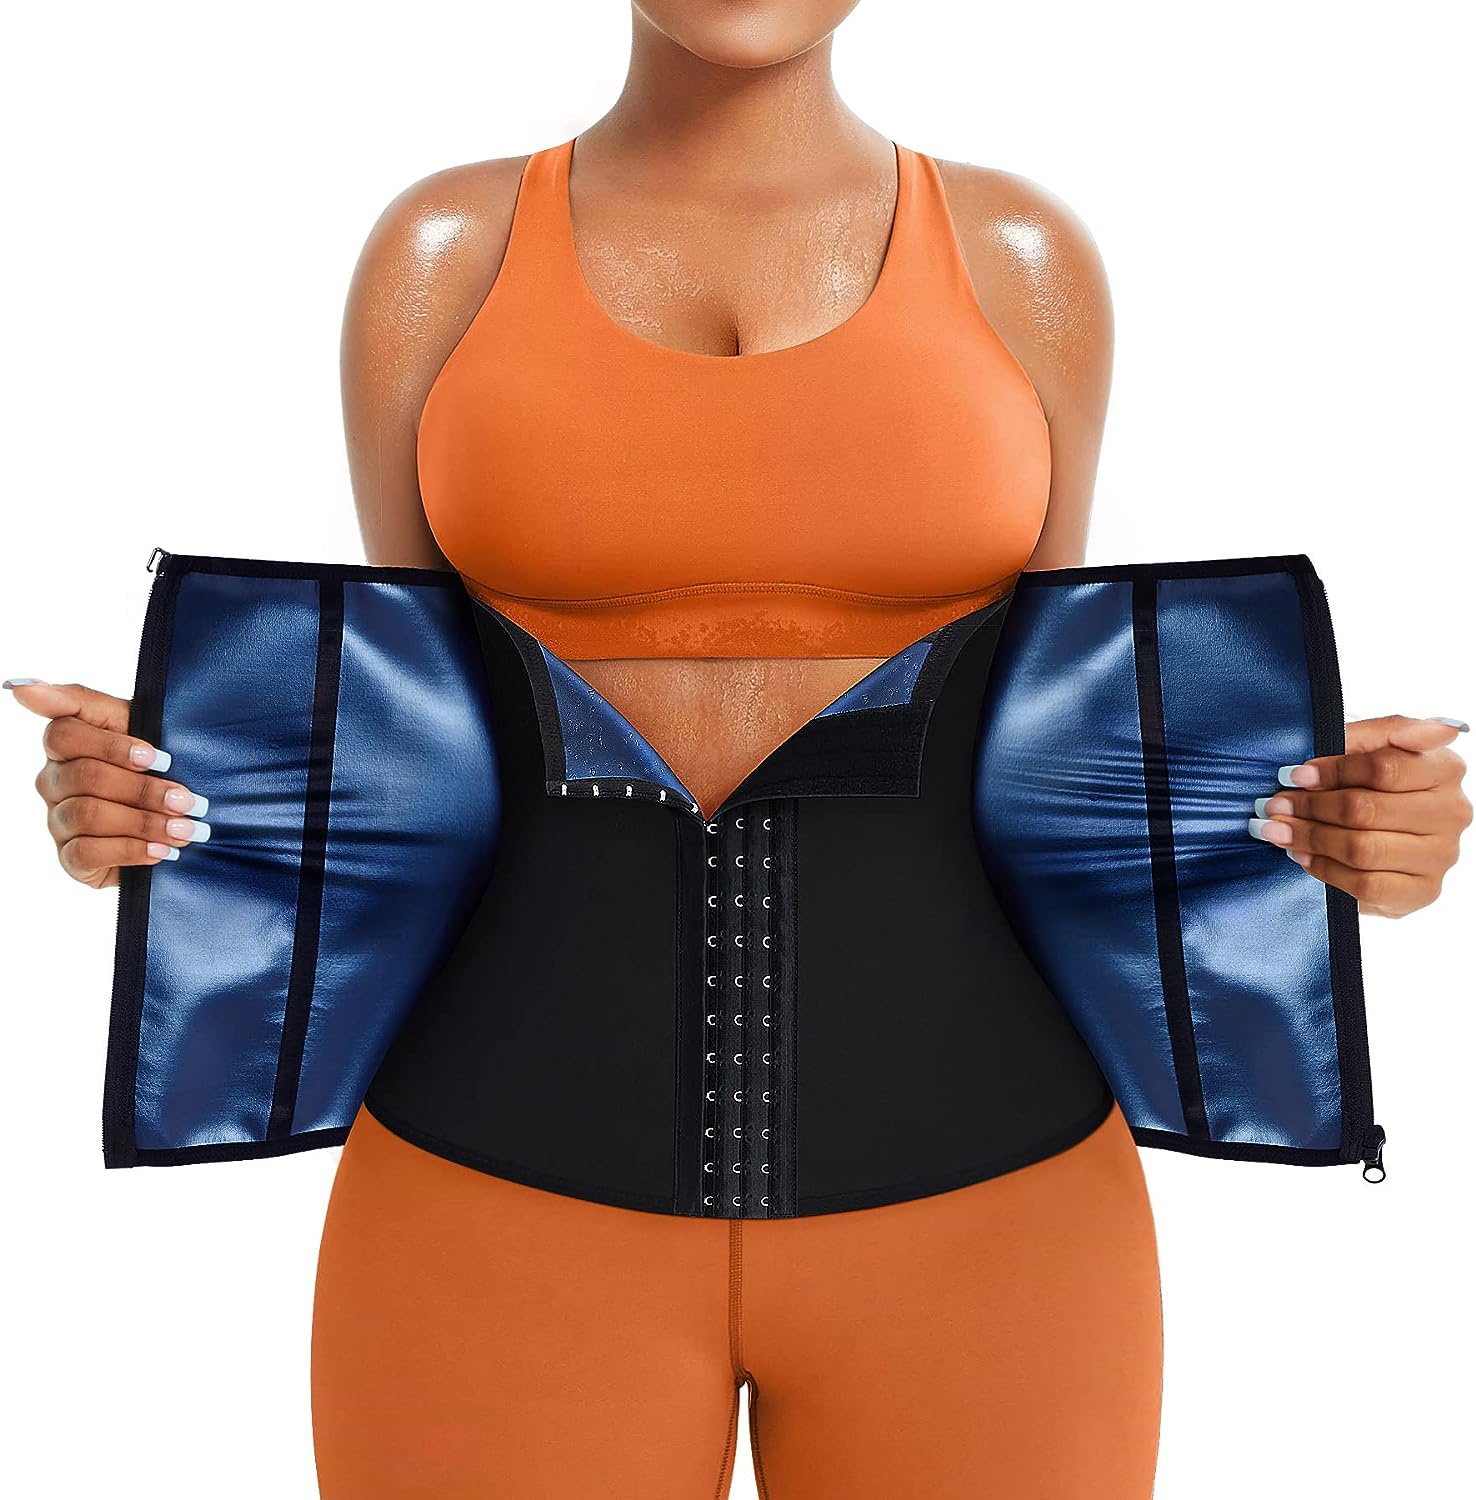 Sweat Belts For Women WholeSale - Price List, Bulk Buy at